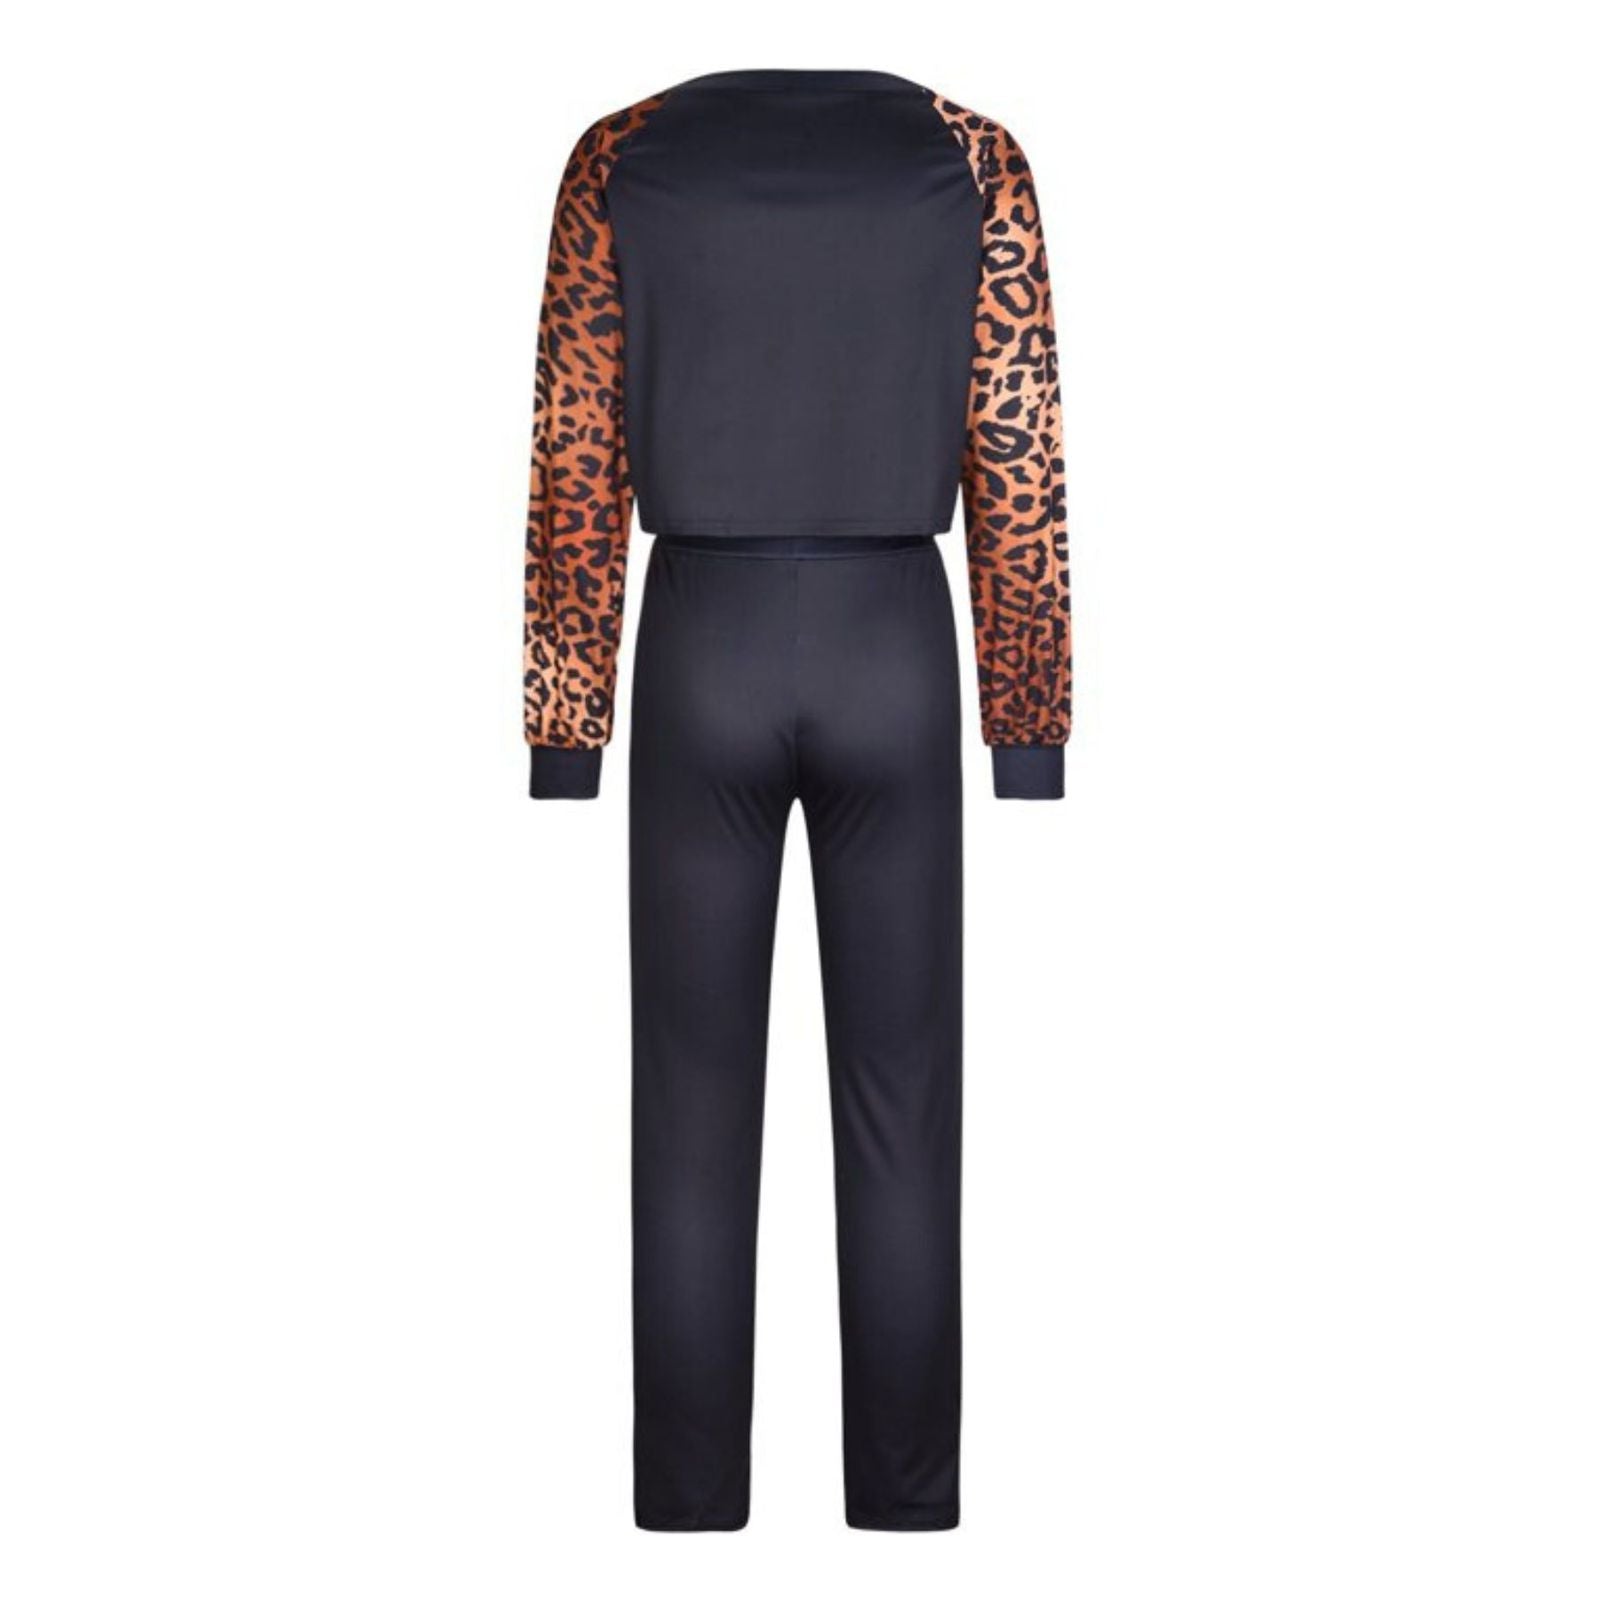 2XL Cheetah Top Pants Set